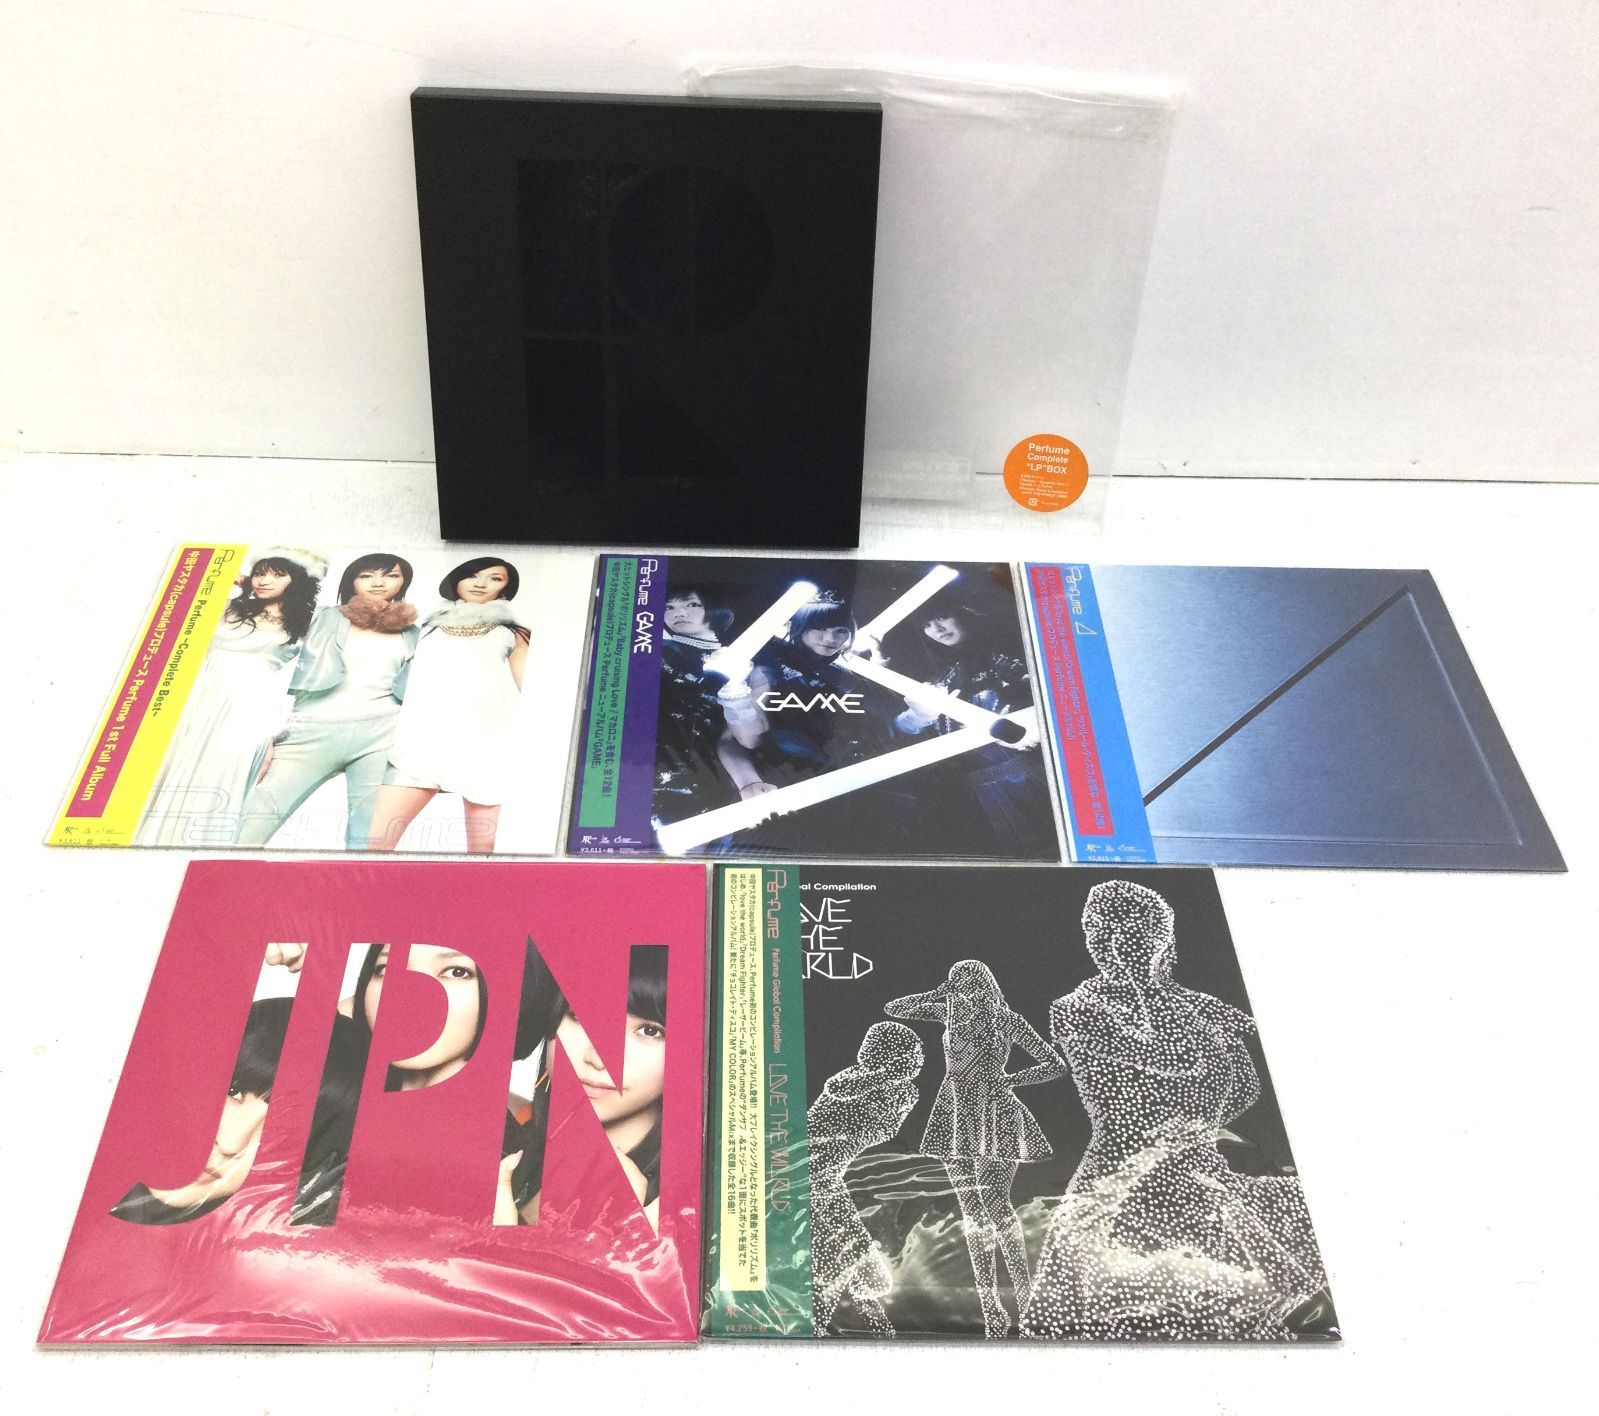 Perfume Complete “LP” BOX (レコード アナログ盤) - 邦楽